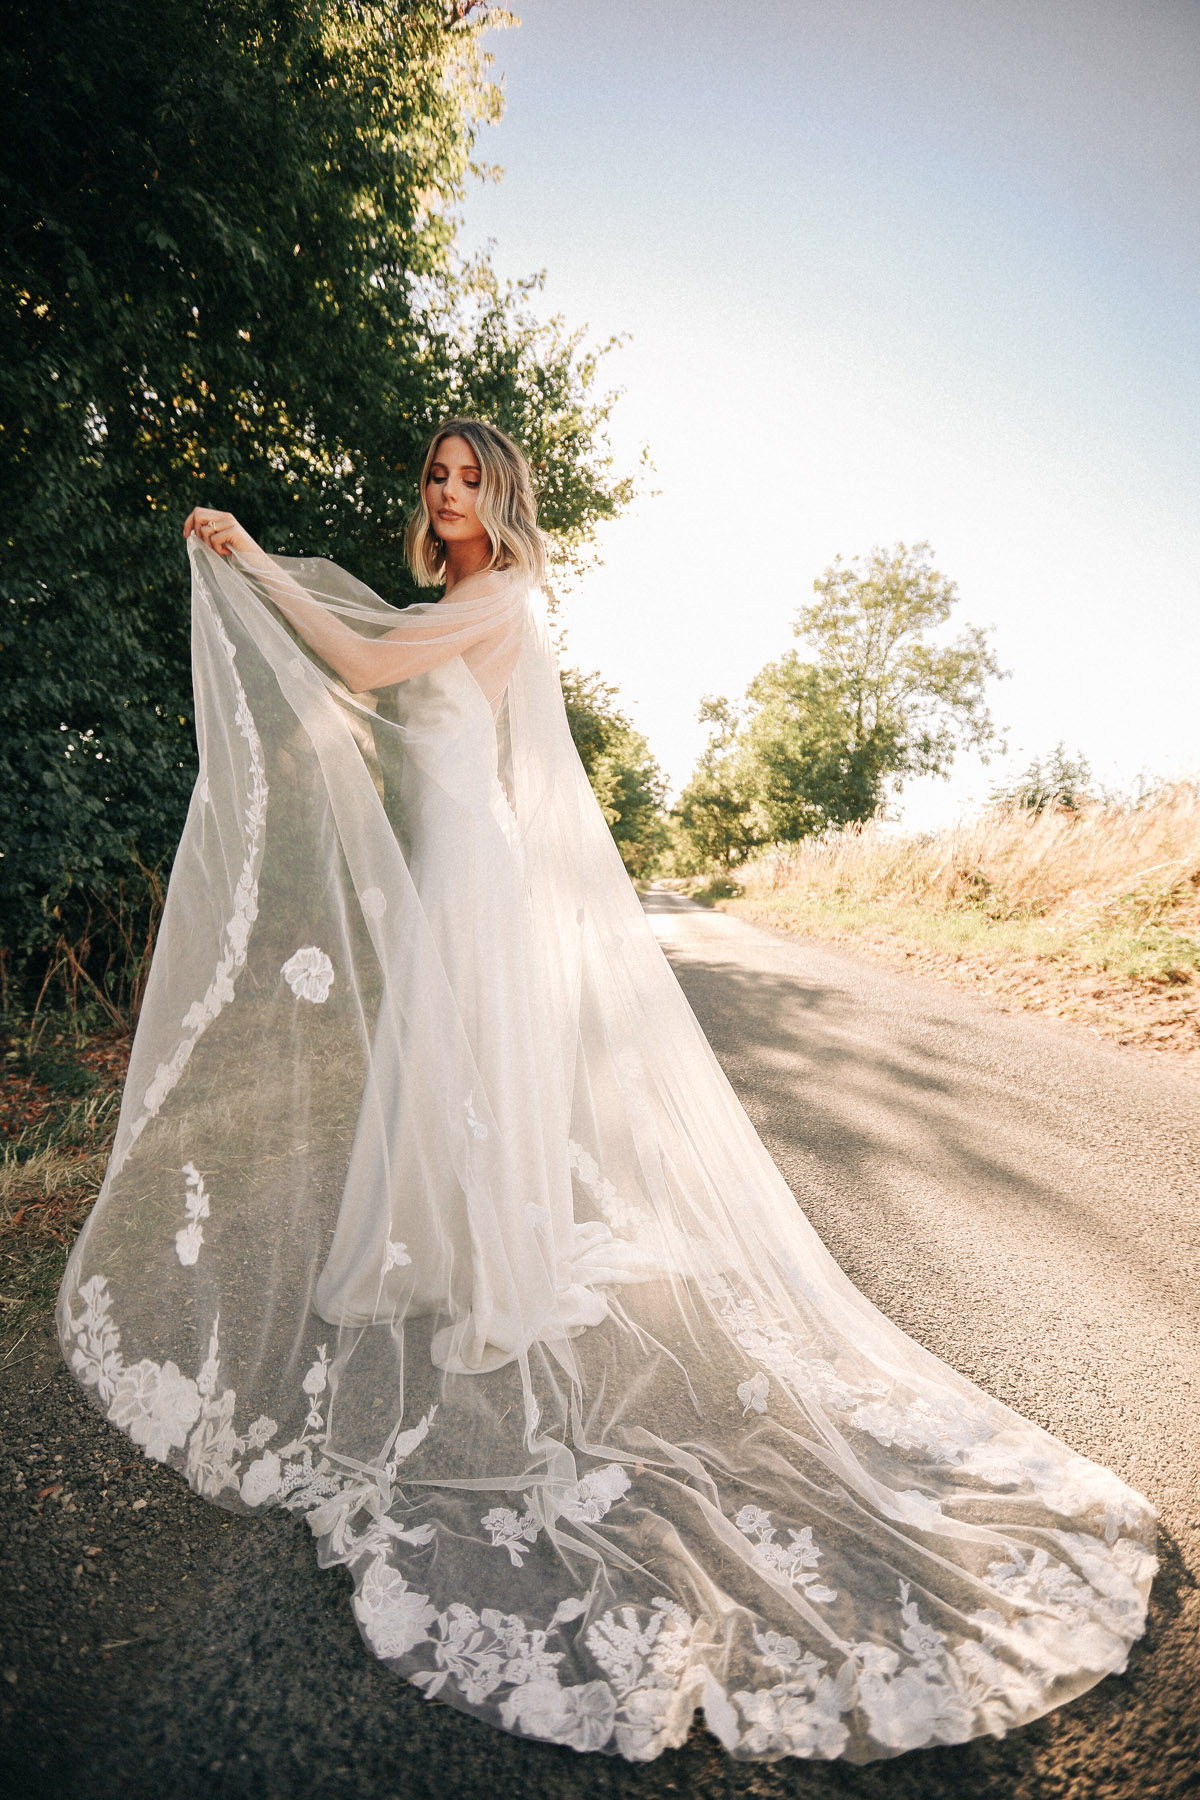 Megan Gilbride wearing Andrea Hawkes Bridal sustainable wedding dress & veil